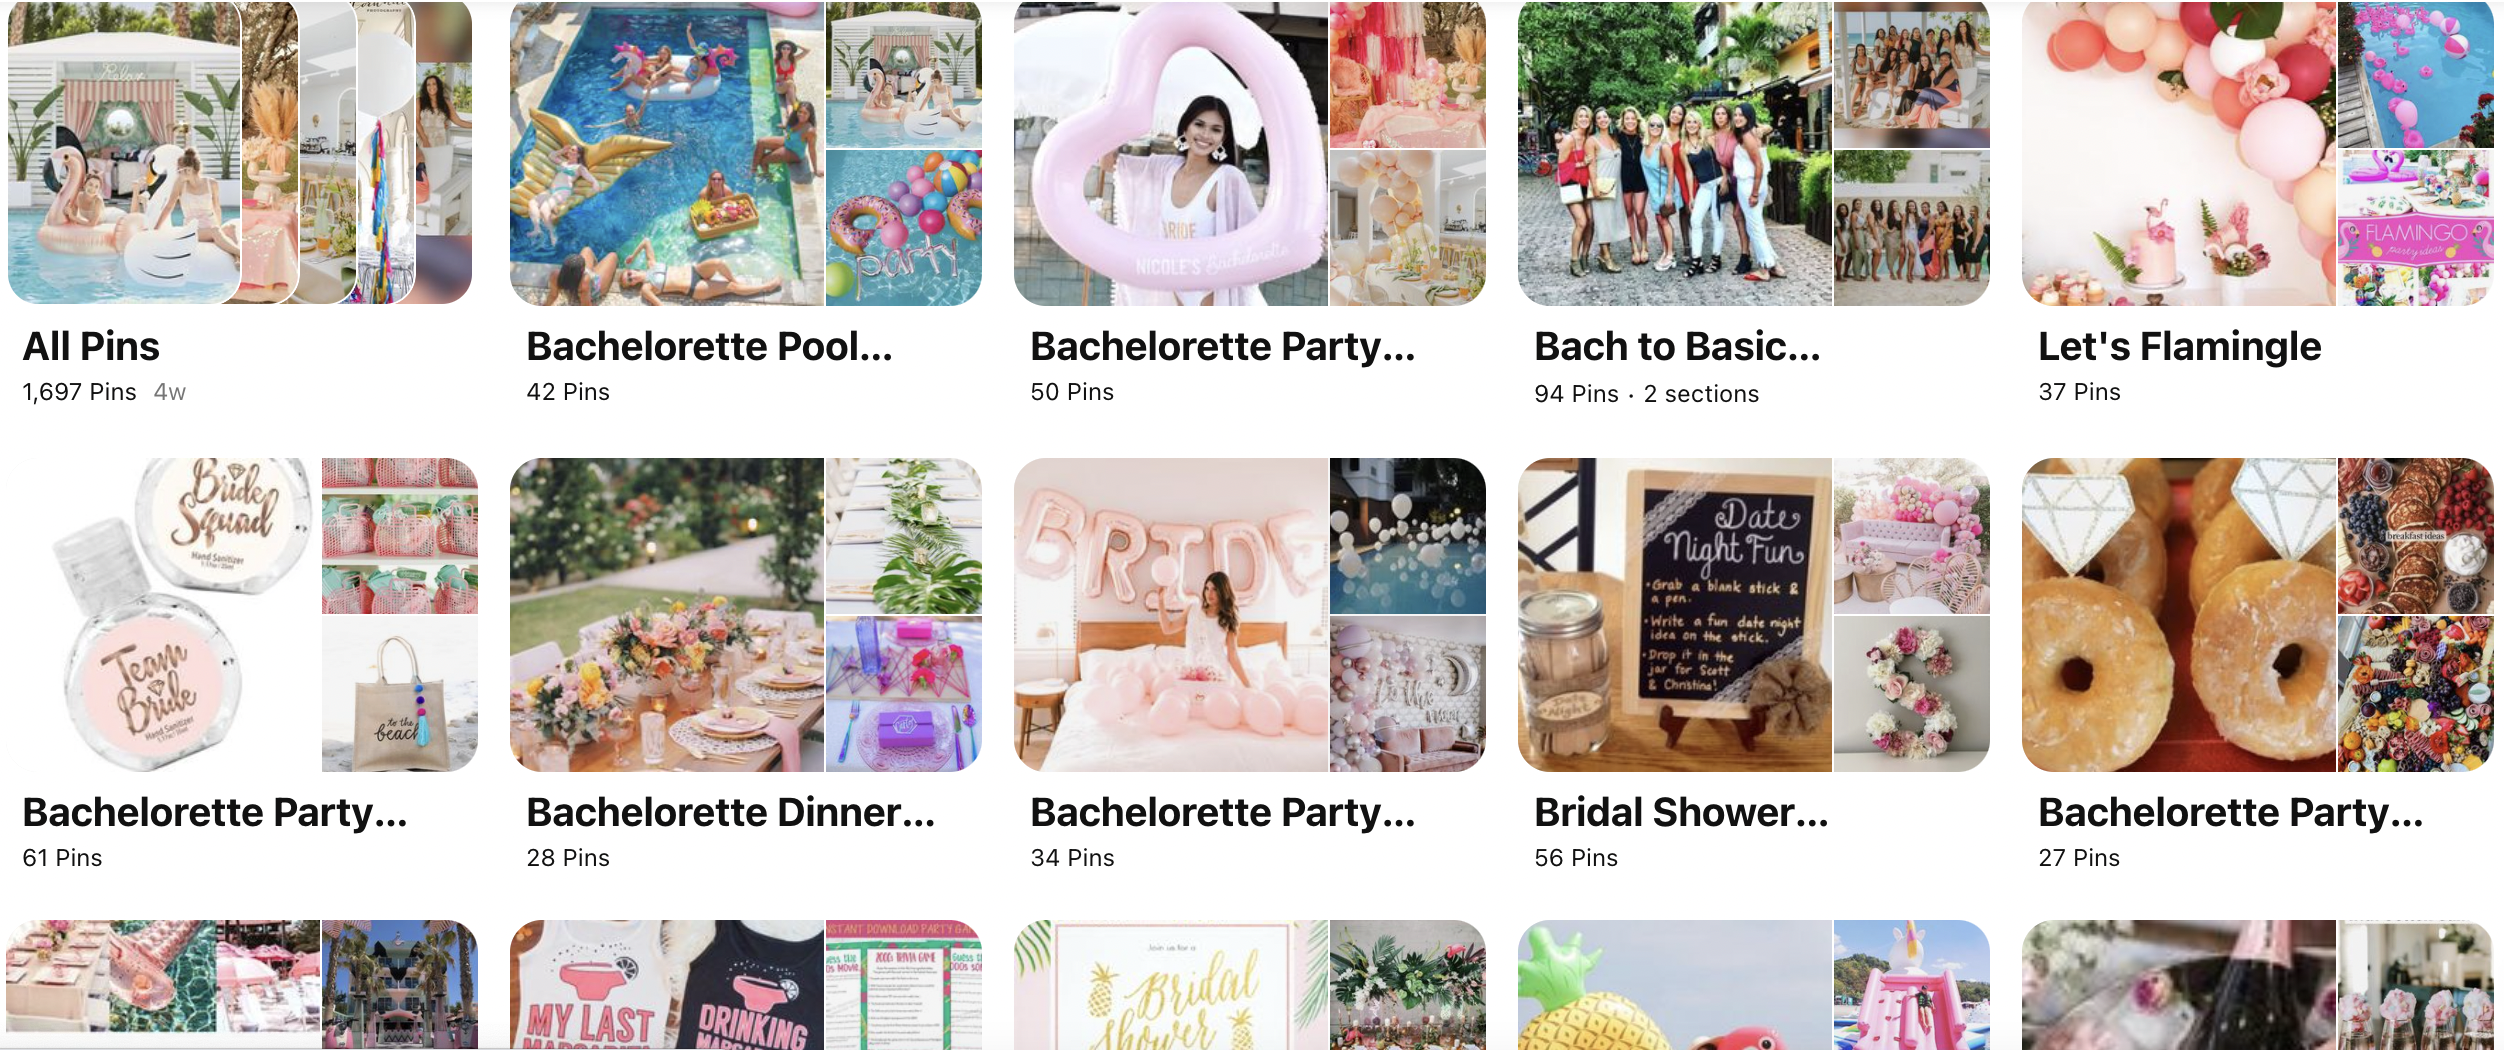 Bachelorette Party Ideas on Pinterest: Bach to Basic